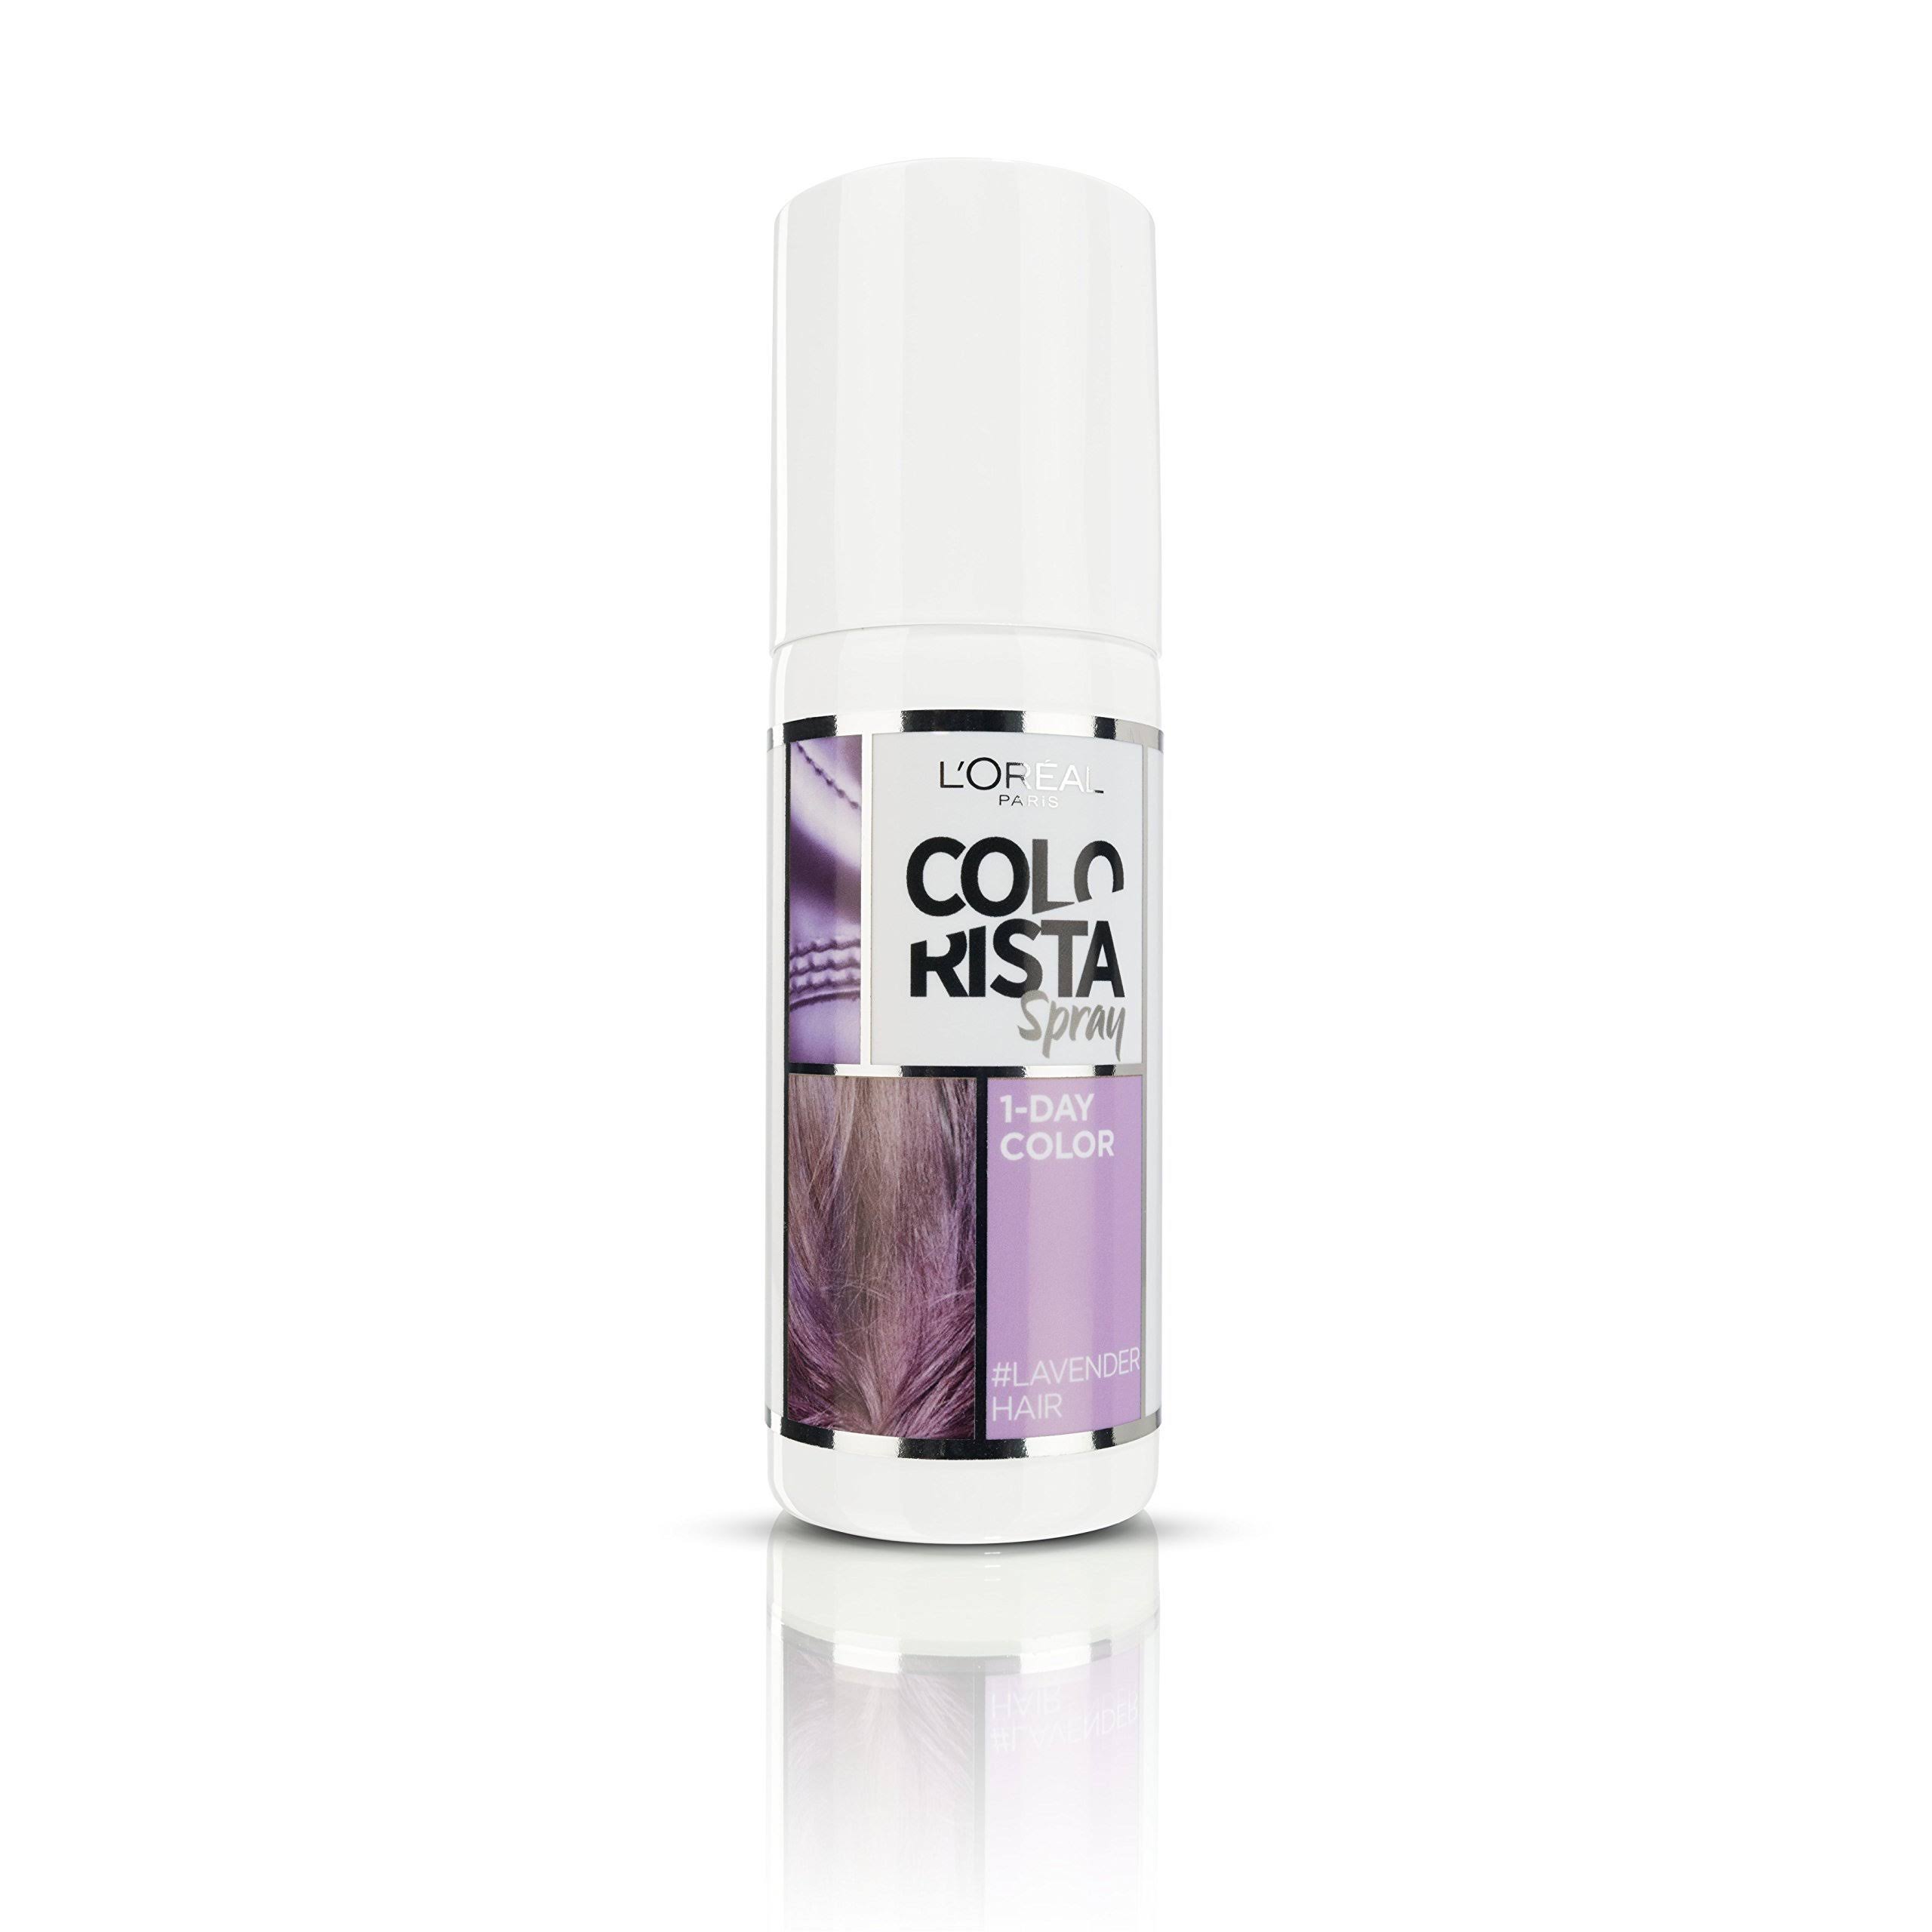 L'Oreal Paris Colorista Spray Hair Colour - Lavender, 27.2g